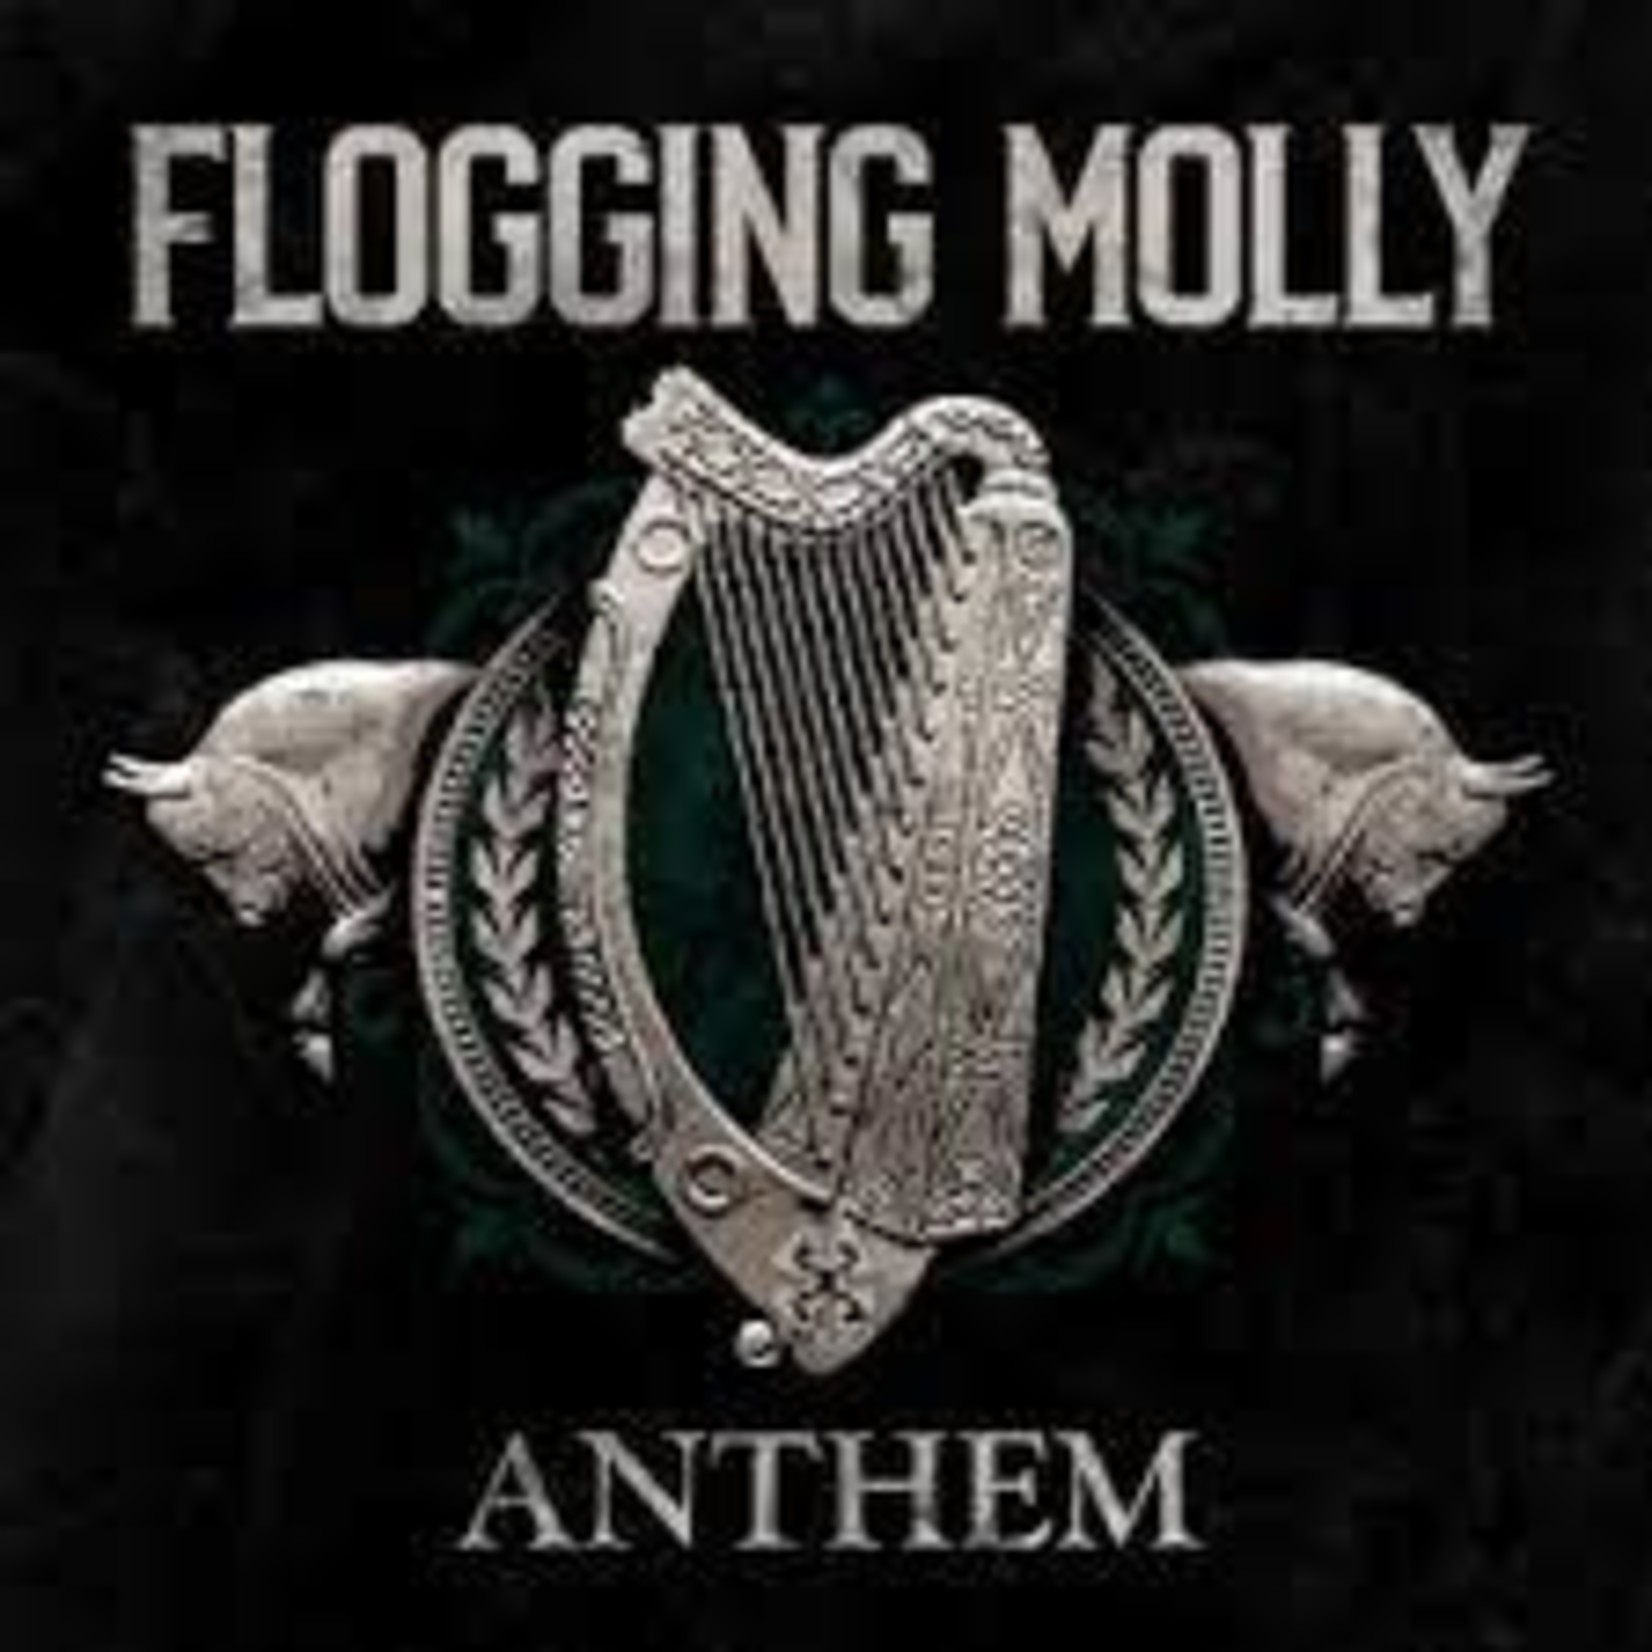 [New] Flogging Molly - Anthem (yellow vinyl, indie exclusive)